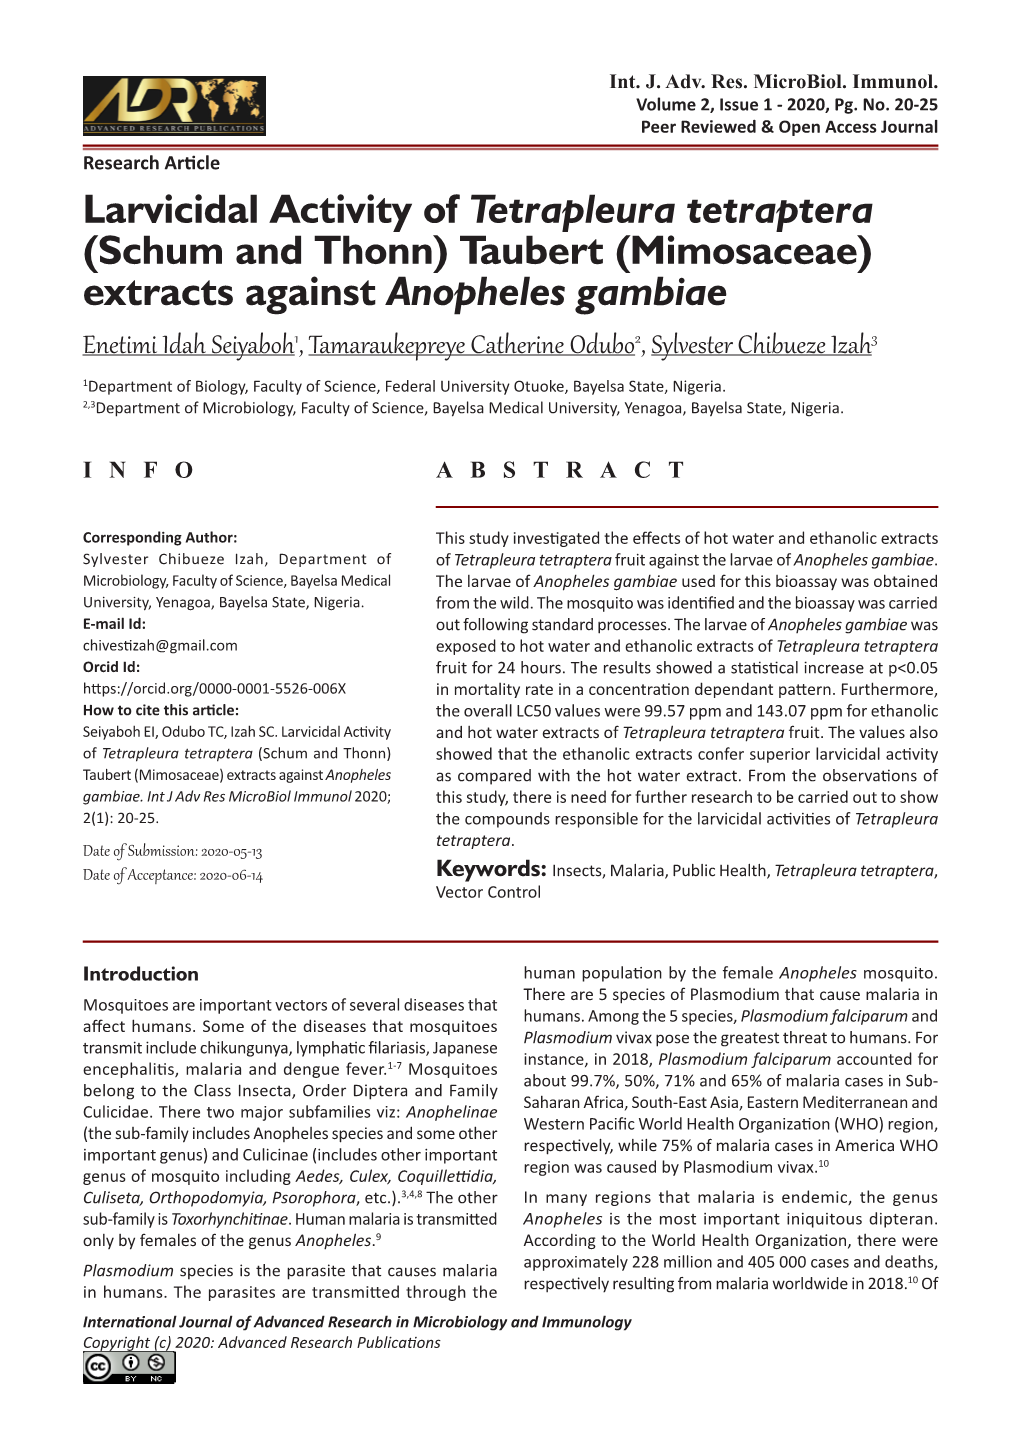 Larvicidal Activity of Tetrapleura Tetraptera (Schum and Thonn)